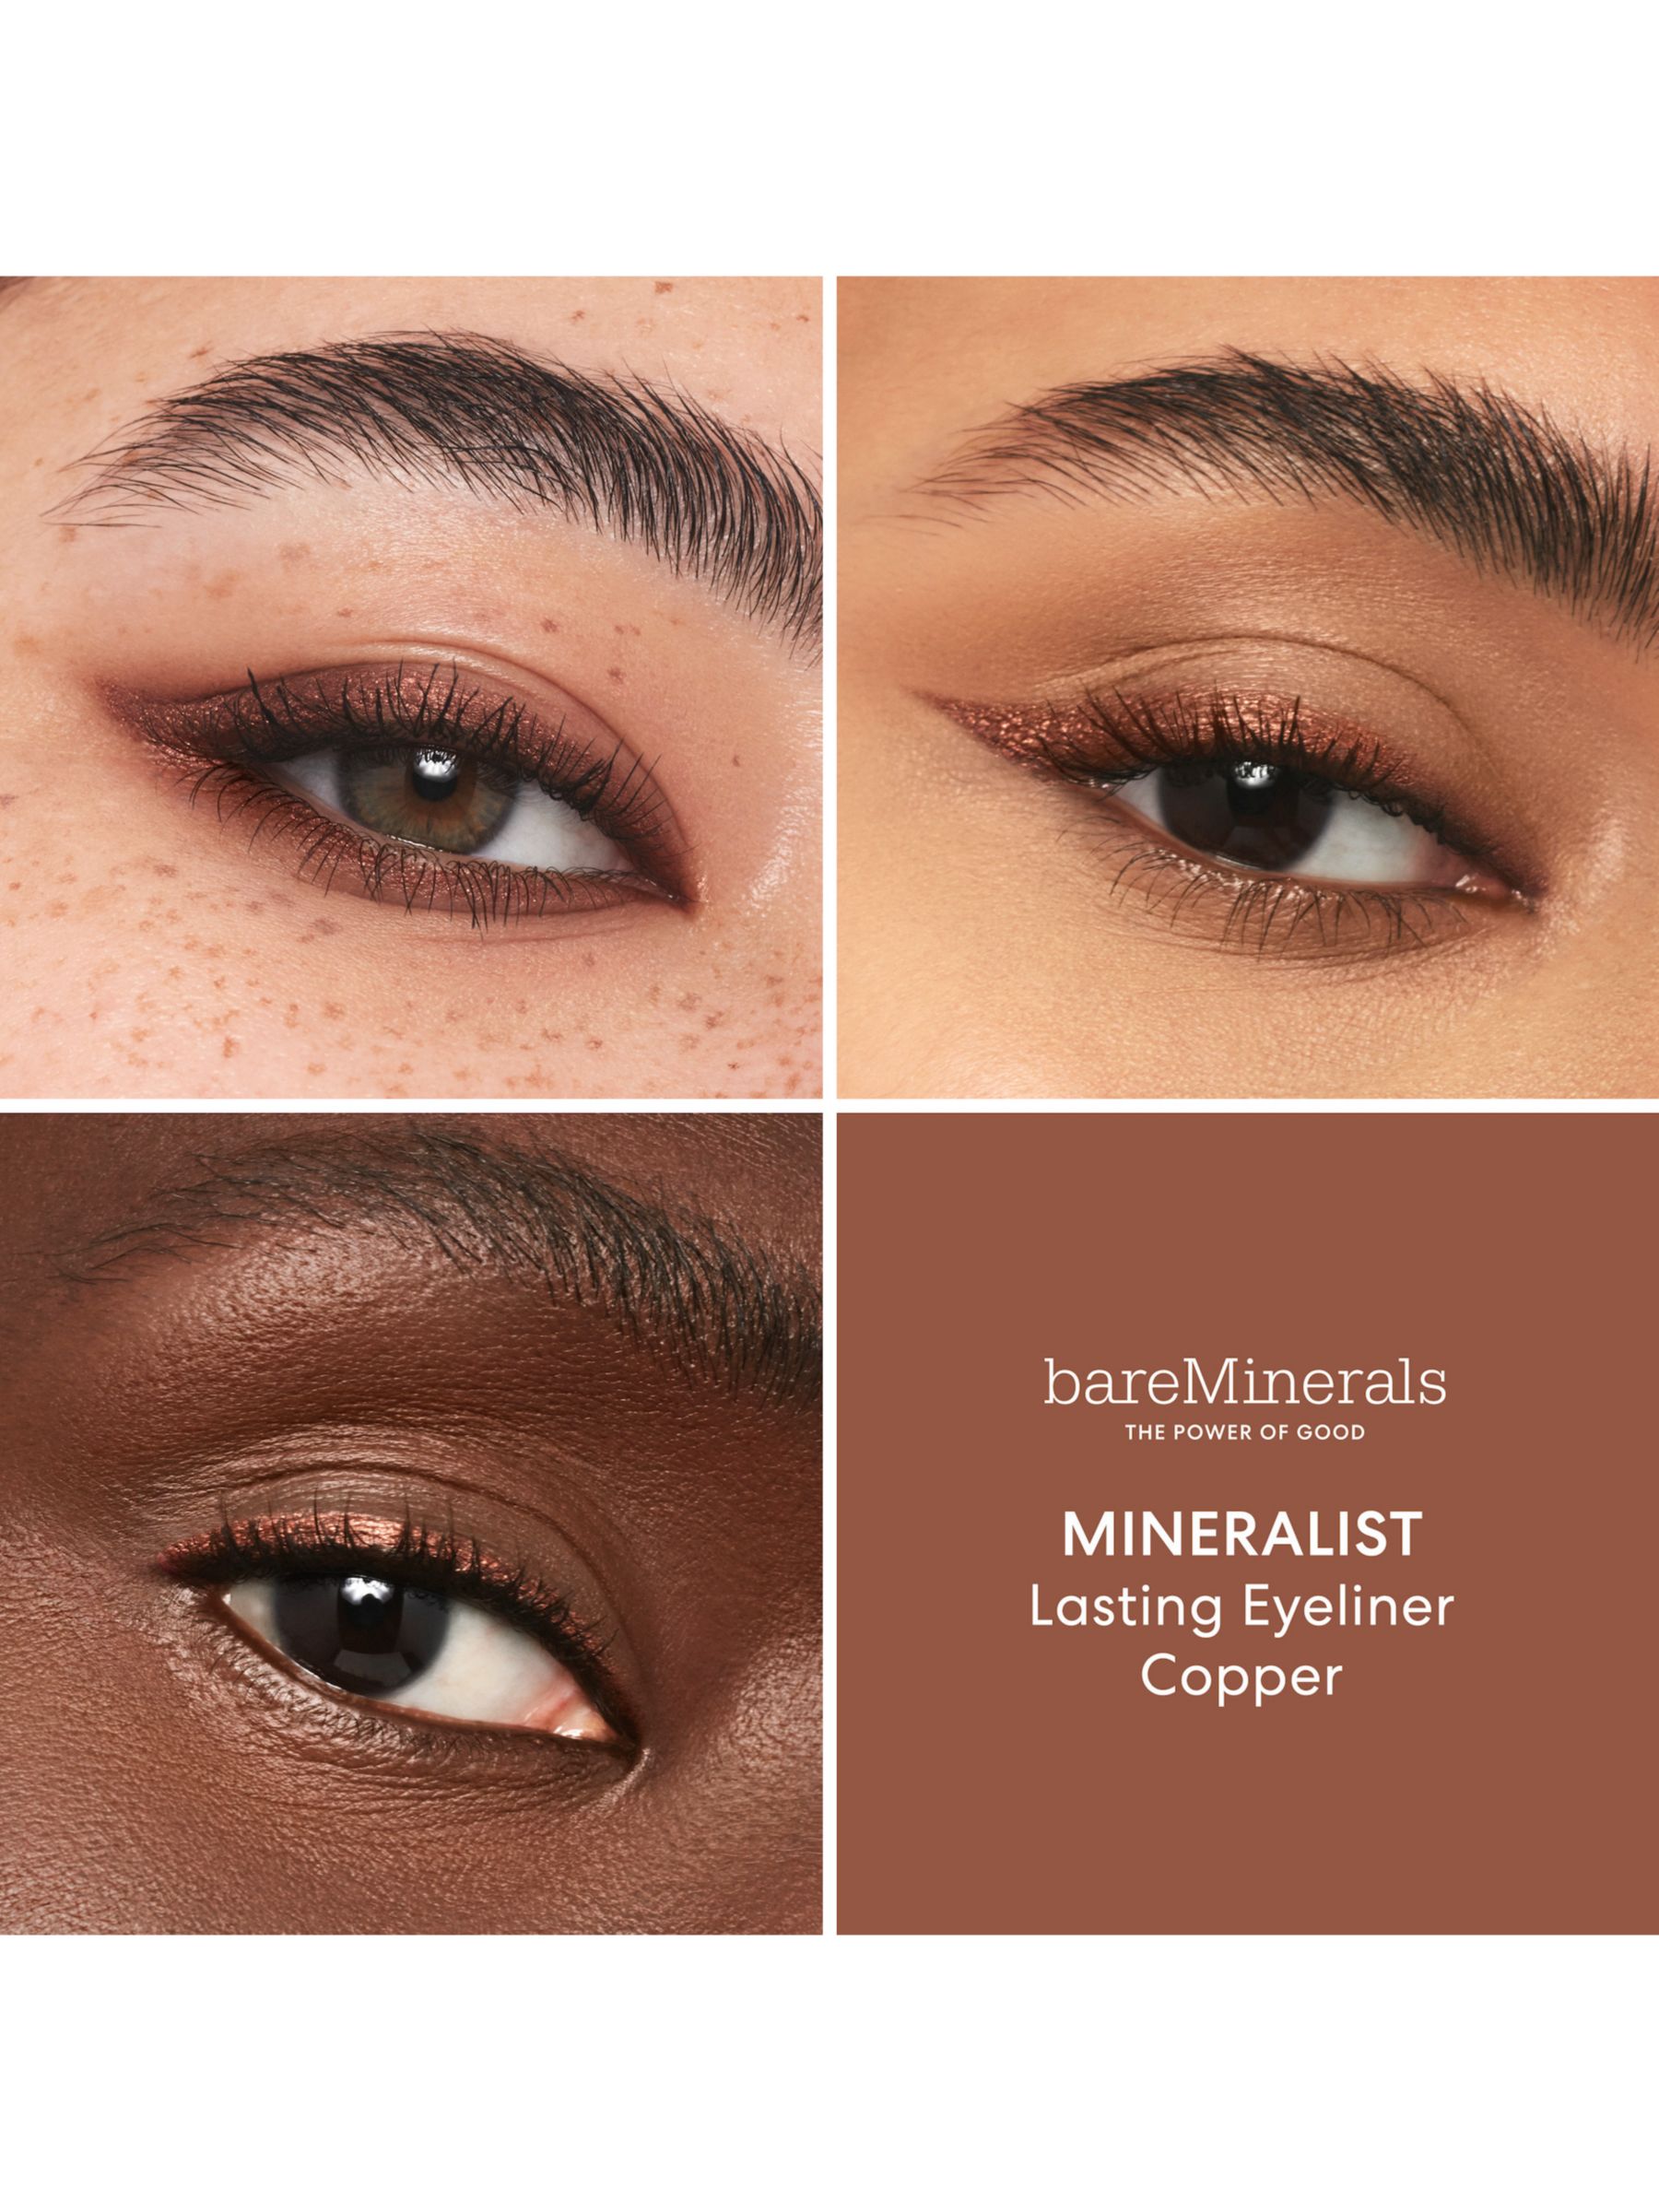 bareMinerals MINERALIST Lasting Eyeliner, Copper 4